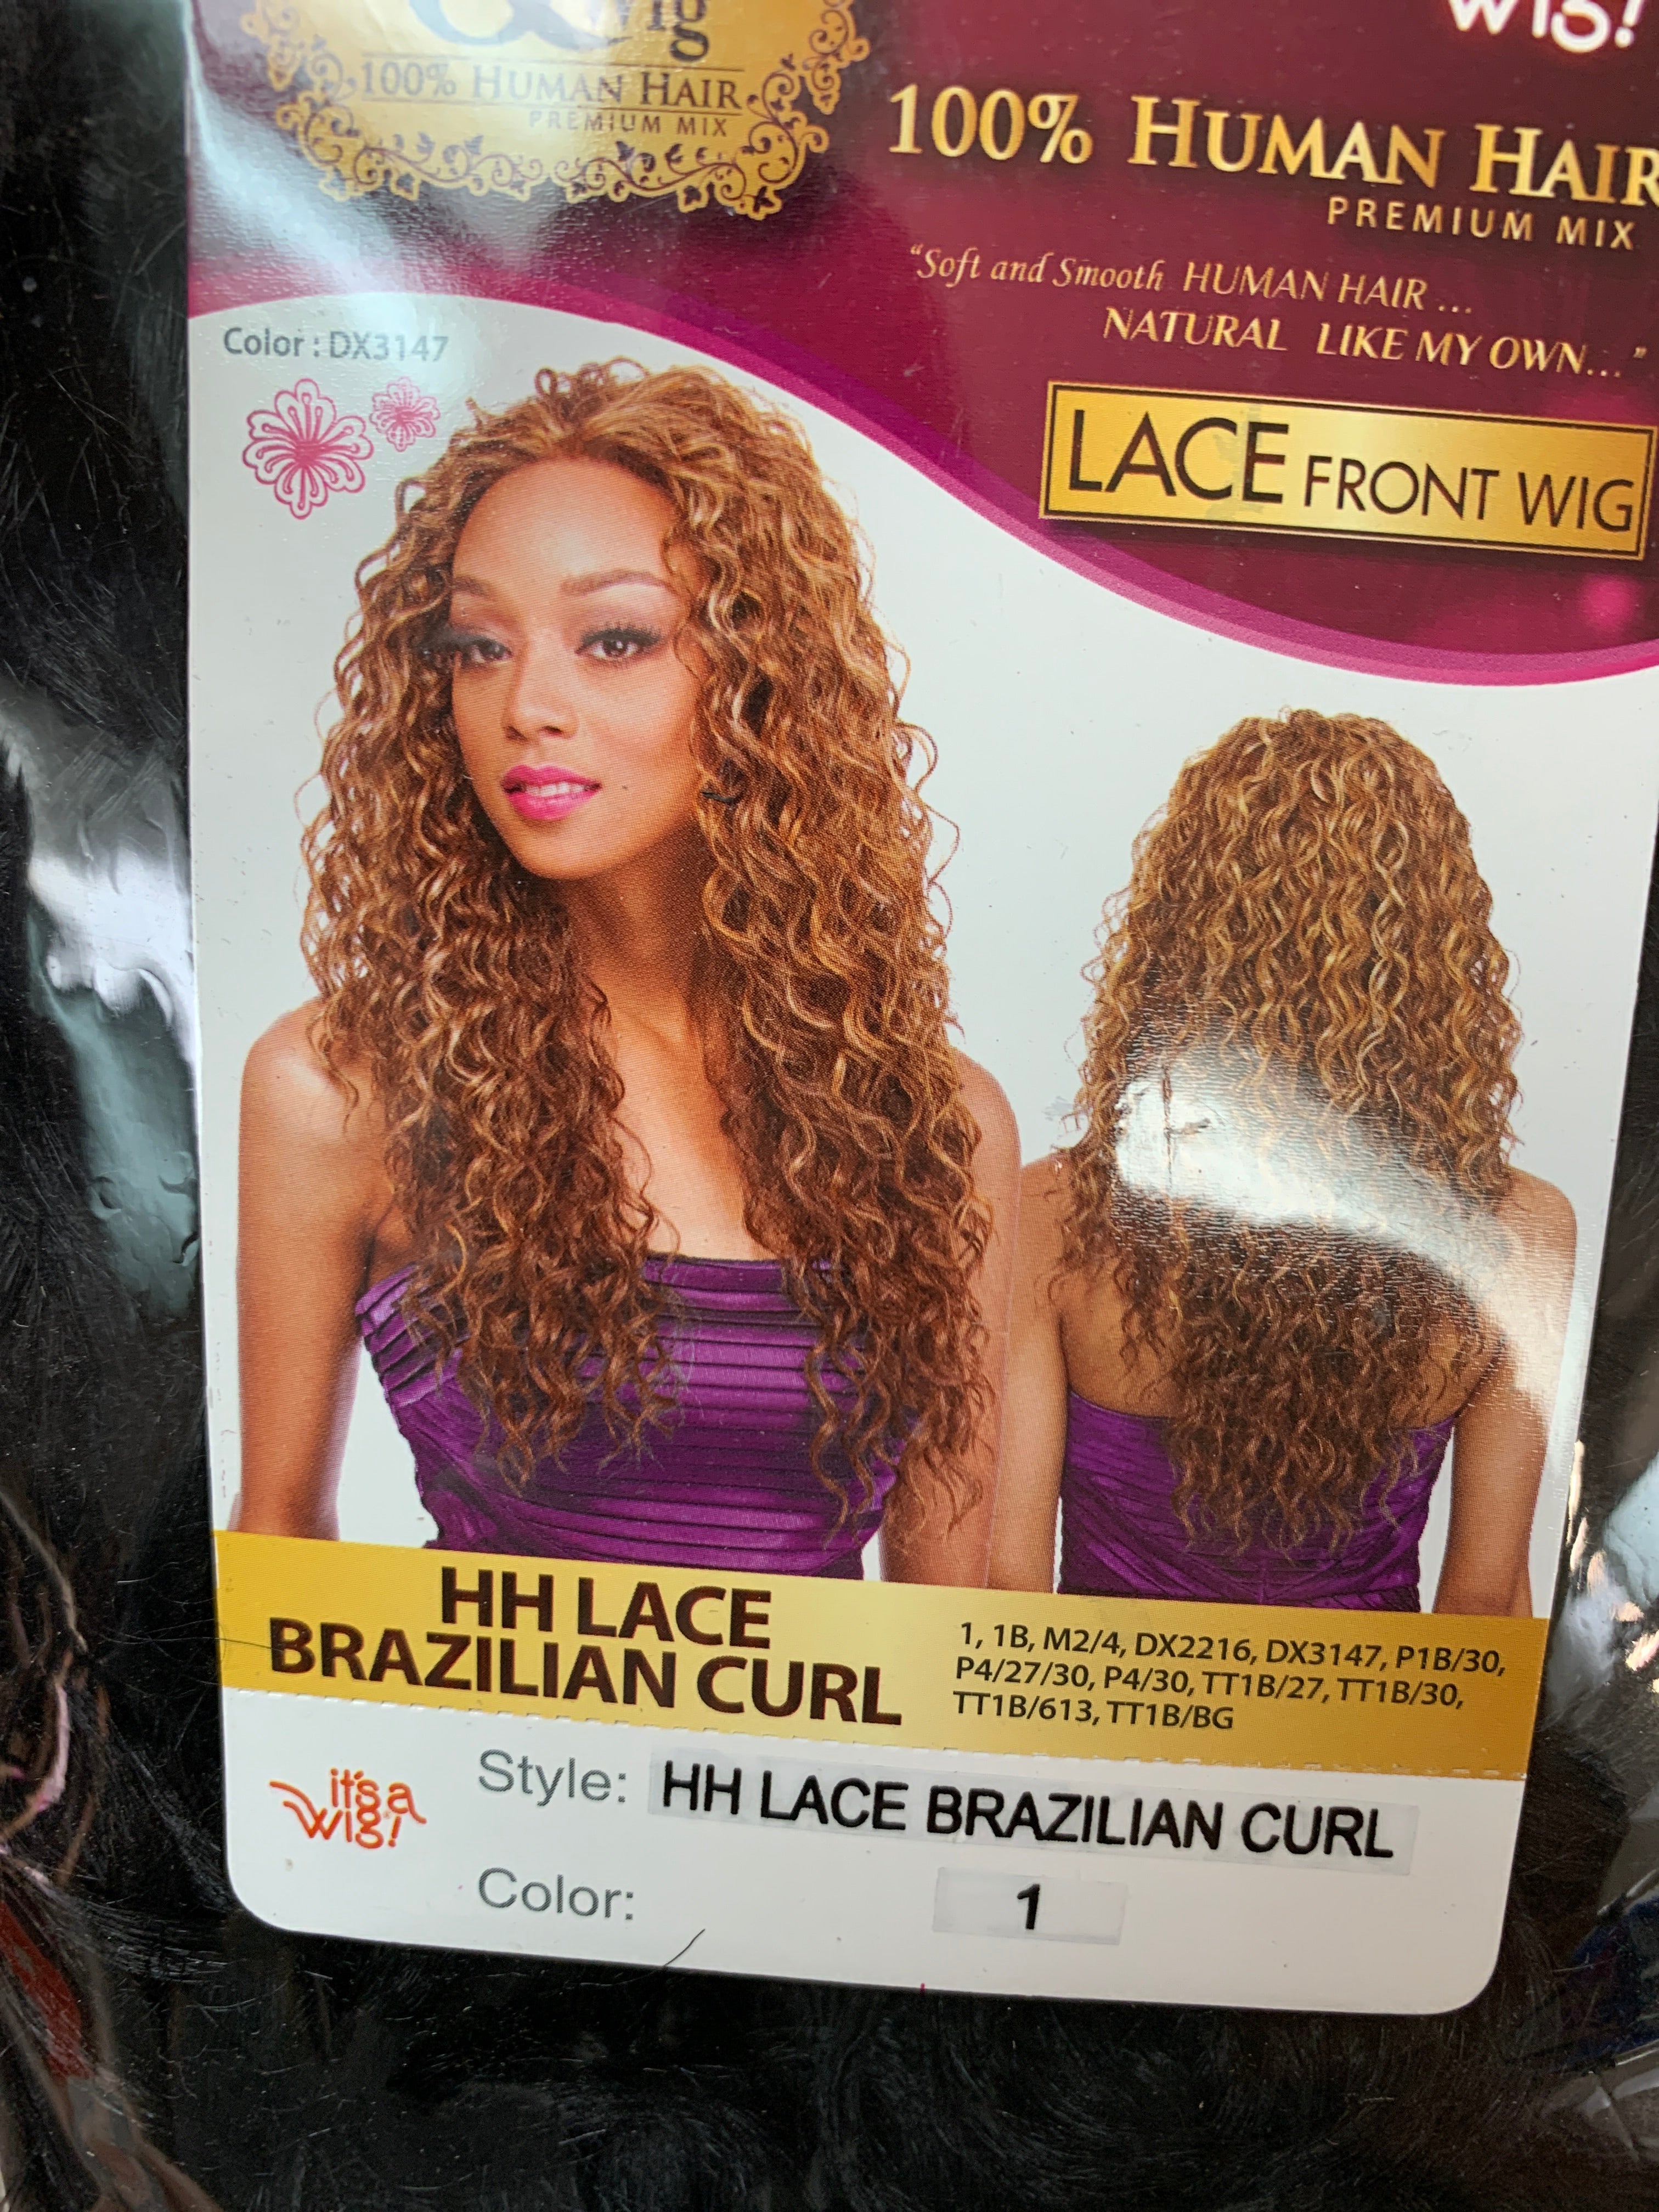 It’s a wig Hh lace brazilian curl